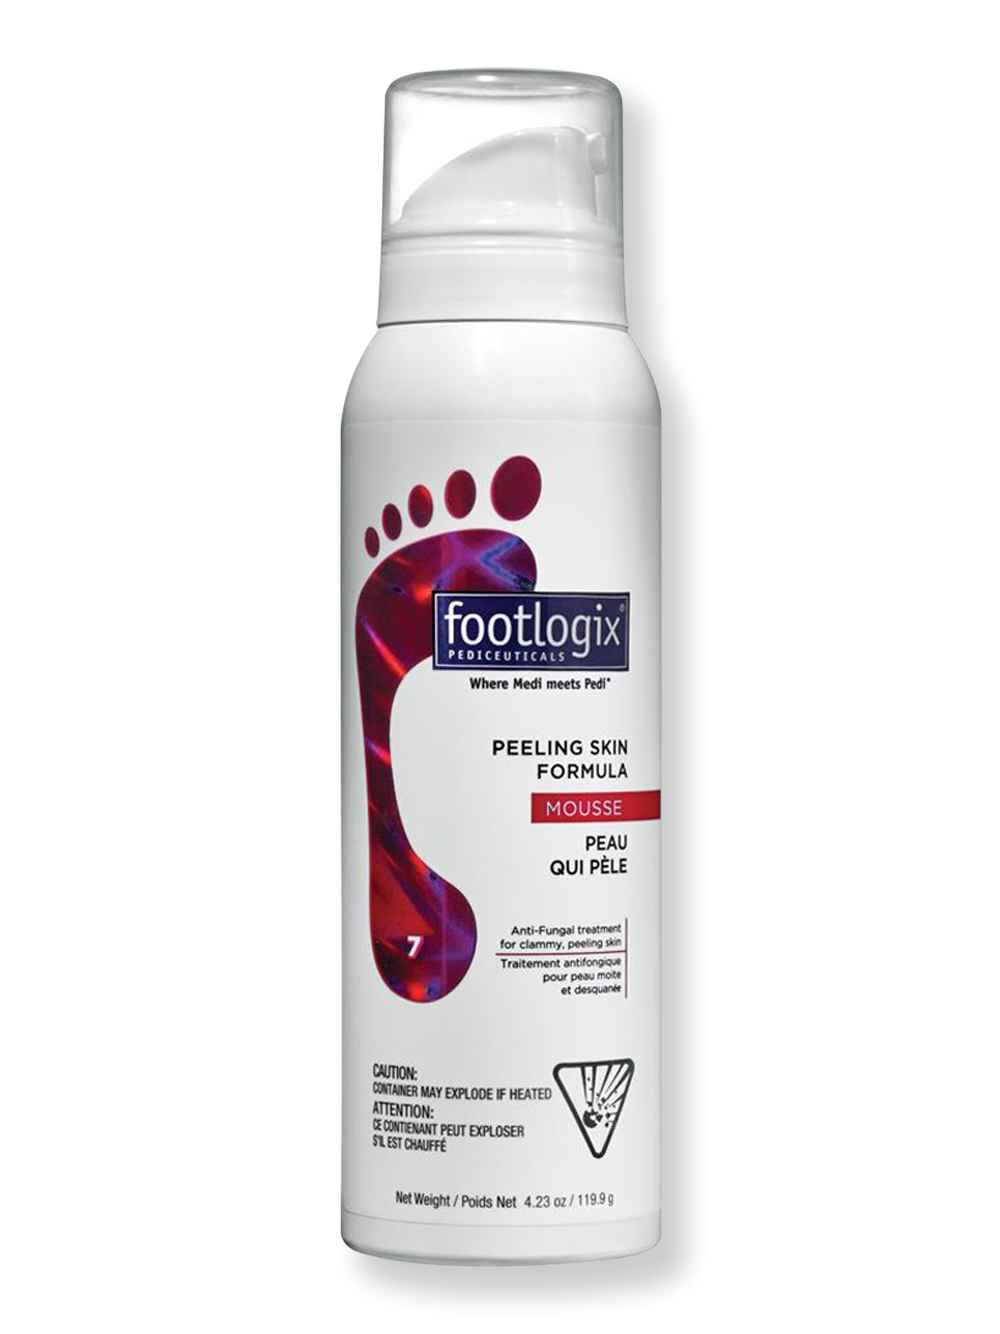 Footlogix Footlogix Peeling Skin Formula With Clotrimazole 4.2 oz125 ml Foot Creams & Treatments 